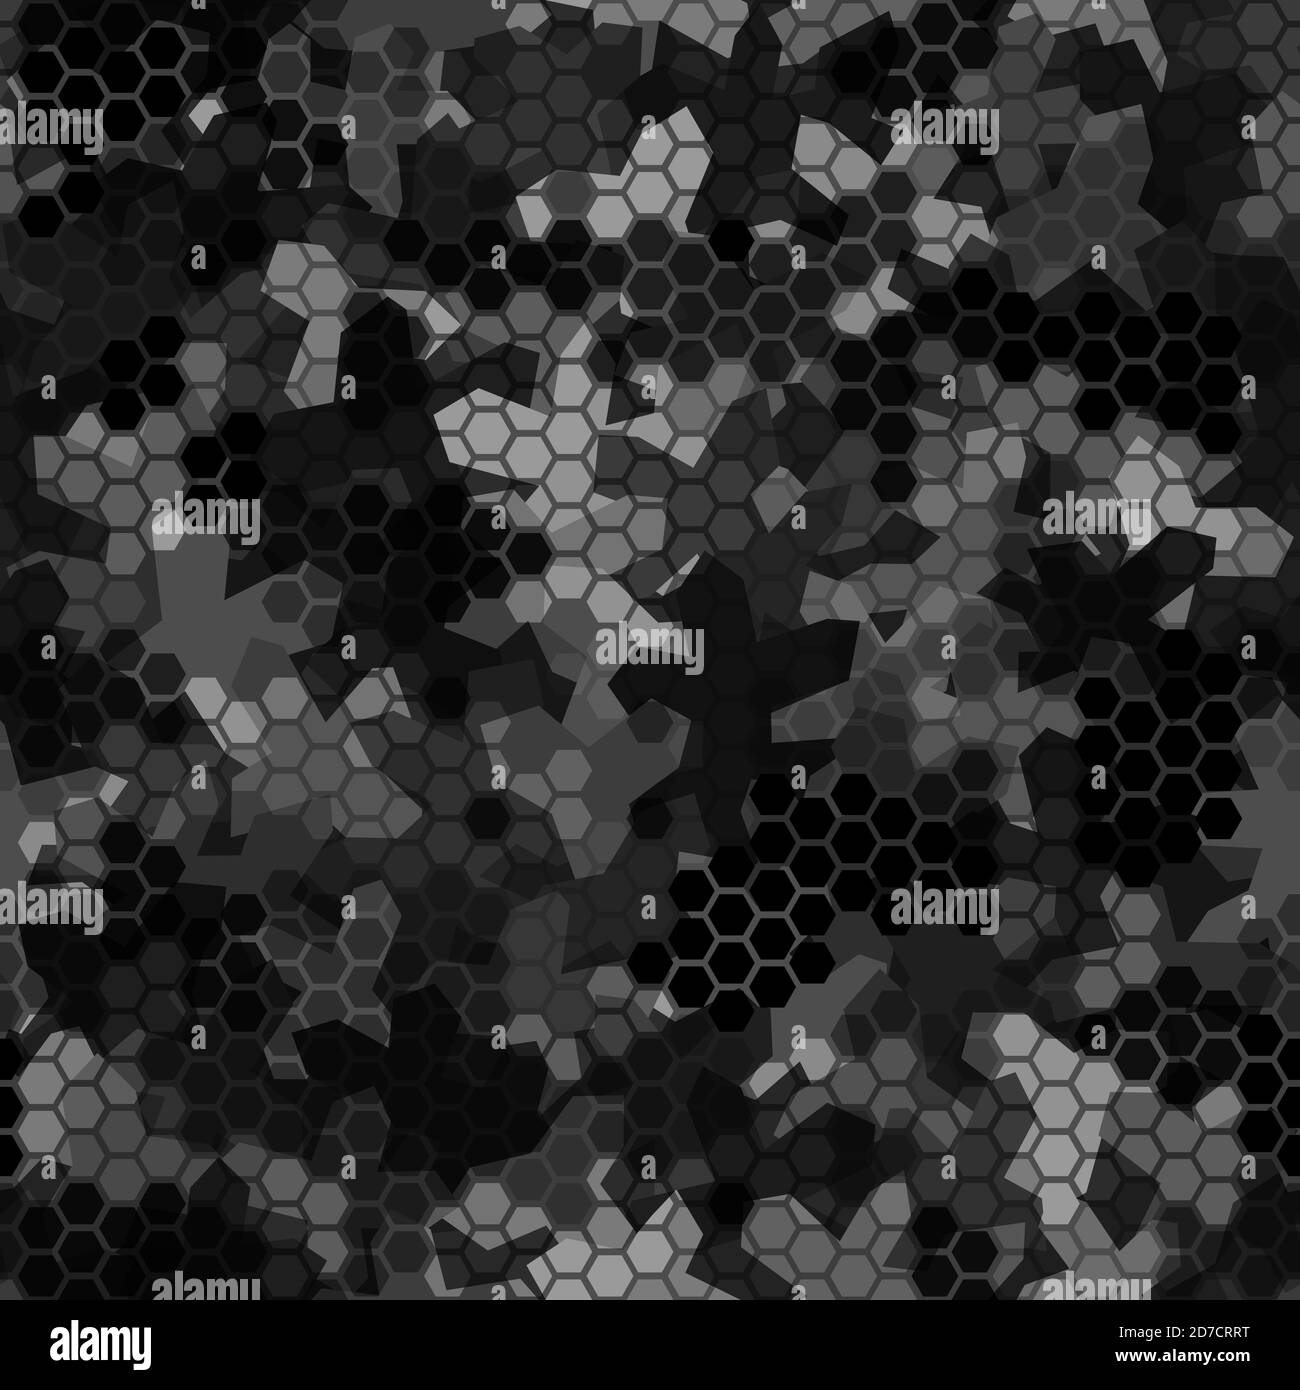 https://c8.alamy.com/comp/2D7CRRT/camouflage-seamless-pattern-with-hexagonal-geometric-ornament-in-dark-grey-2D7CRRT.jpg